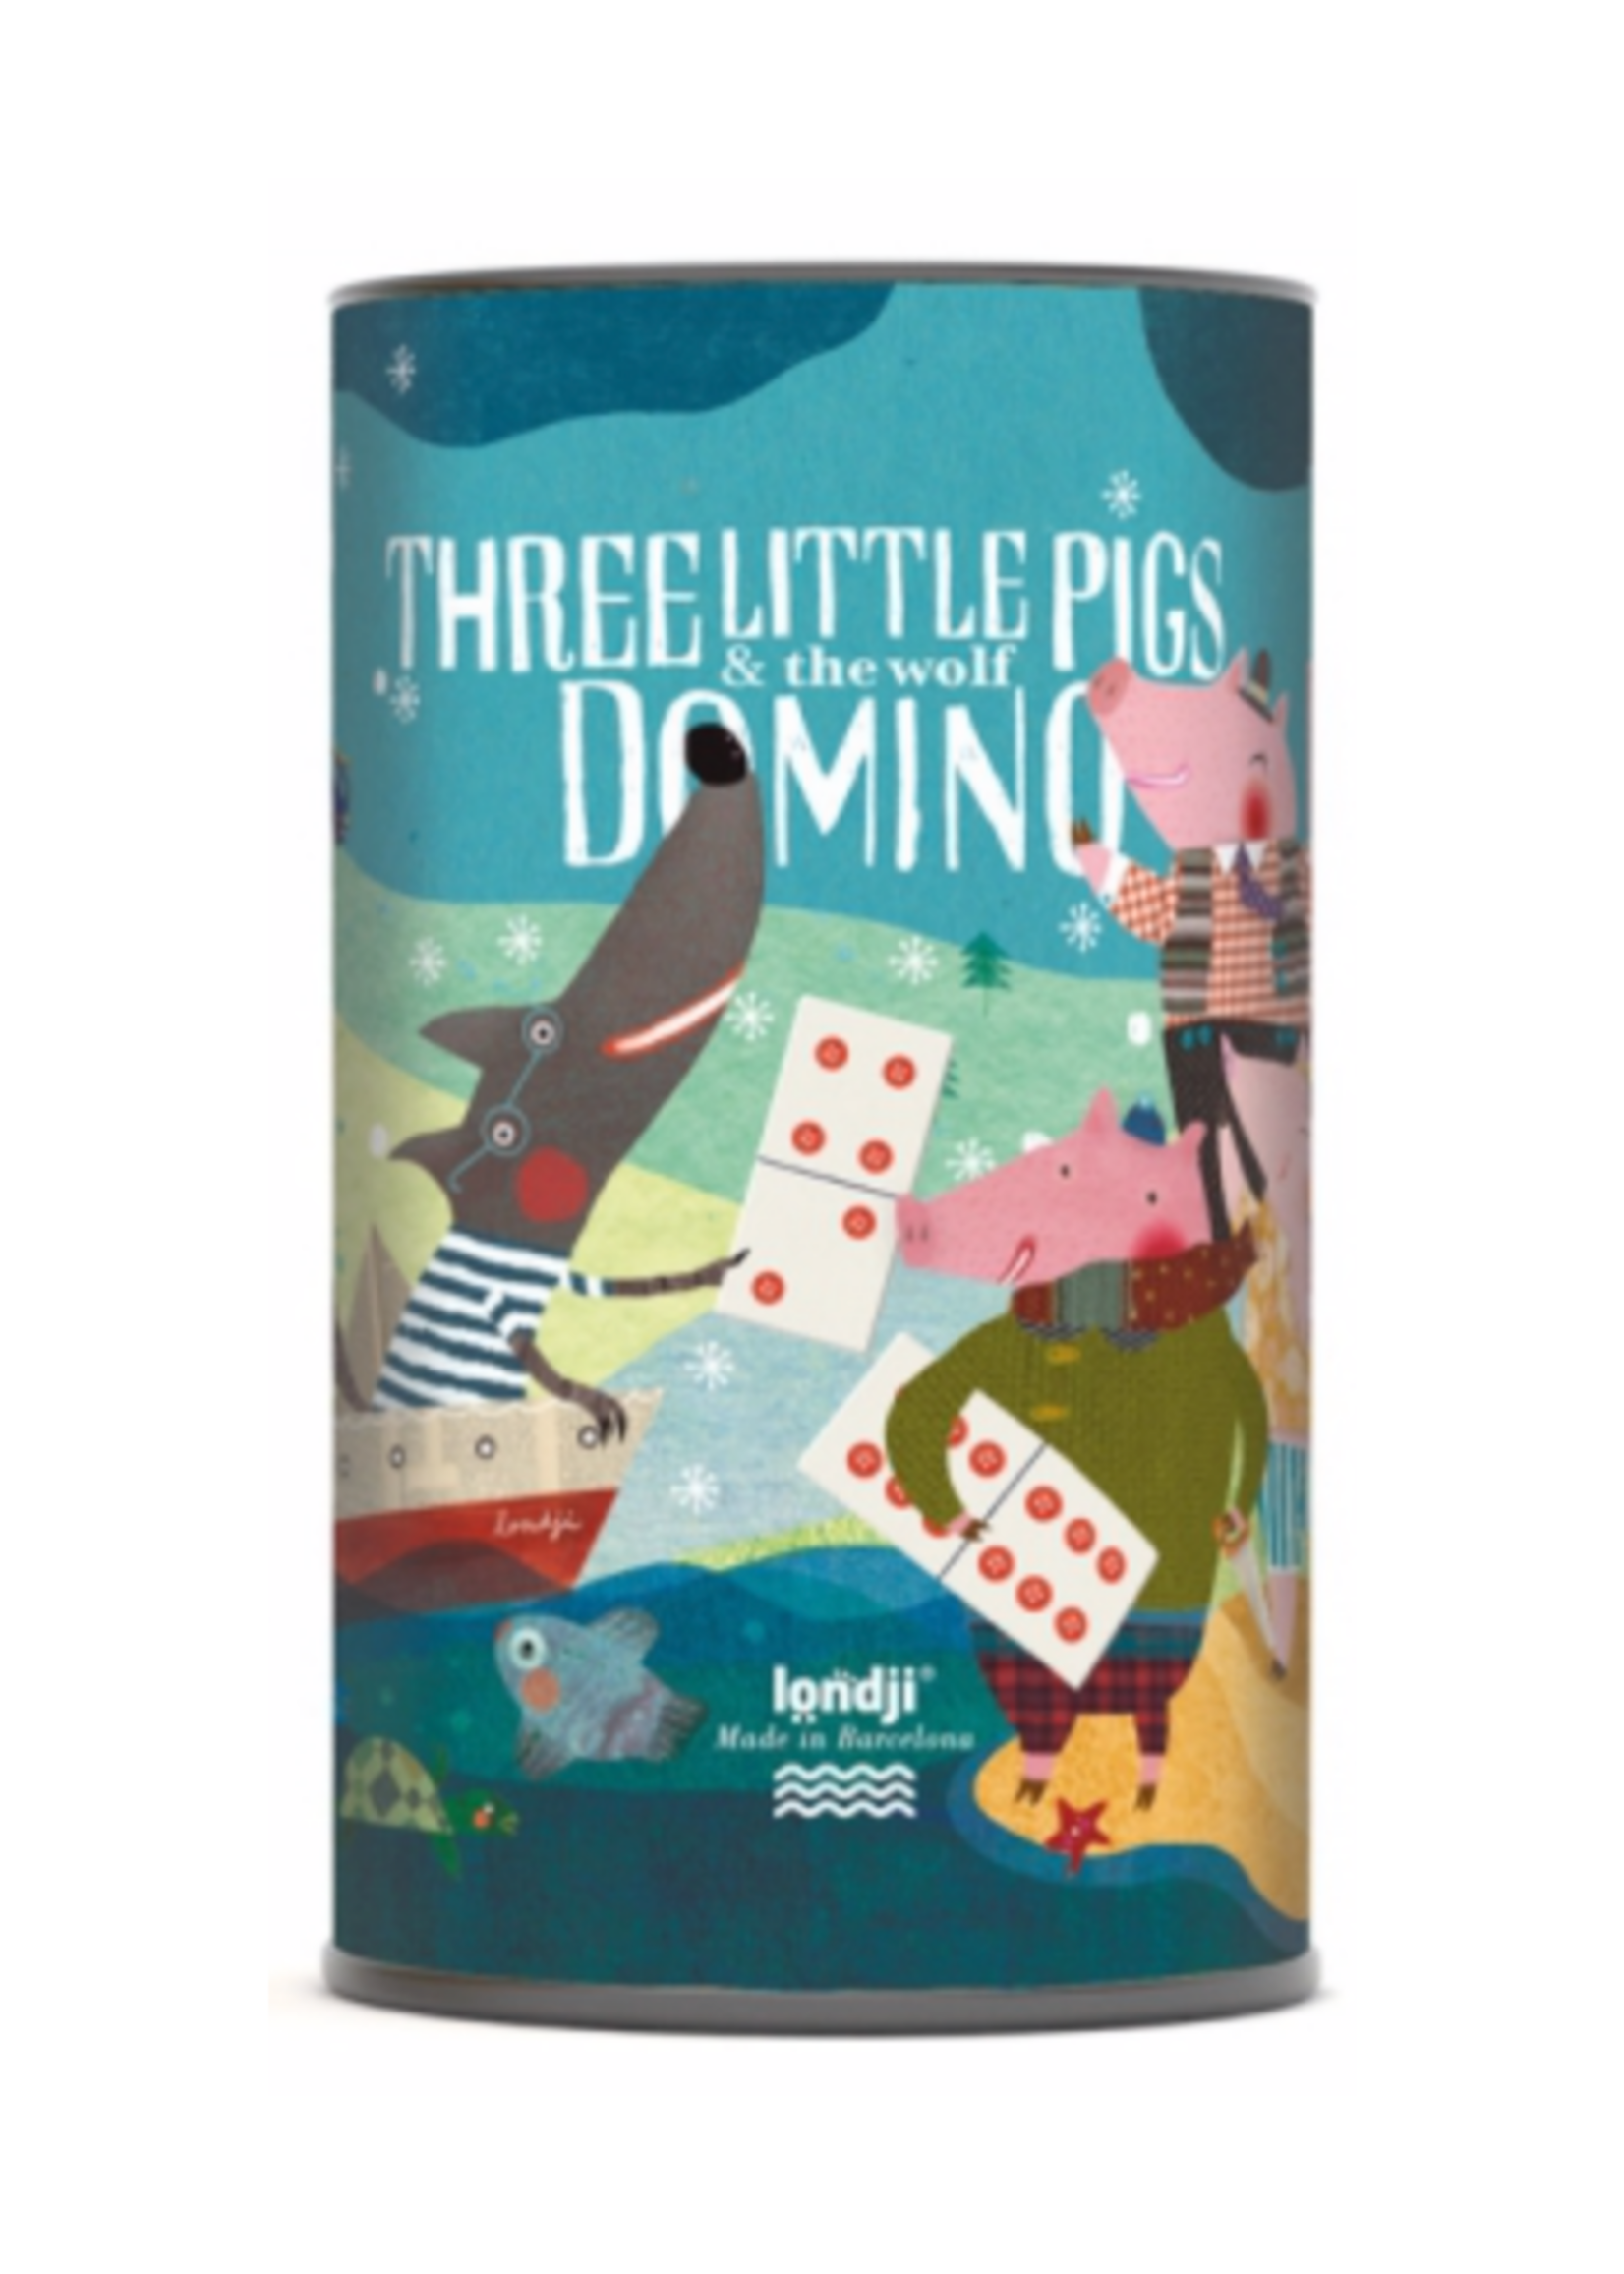 Londji Three Little Pigs Domino Game